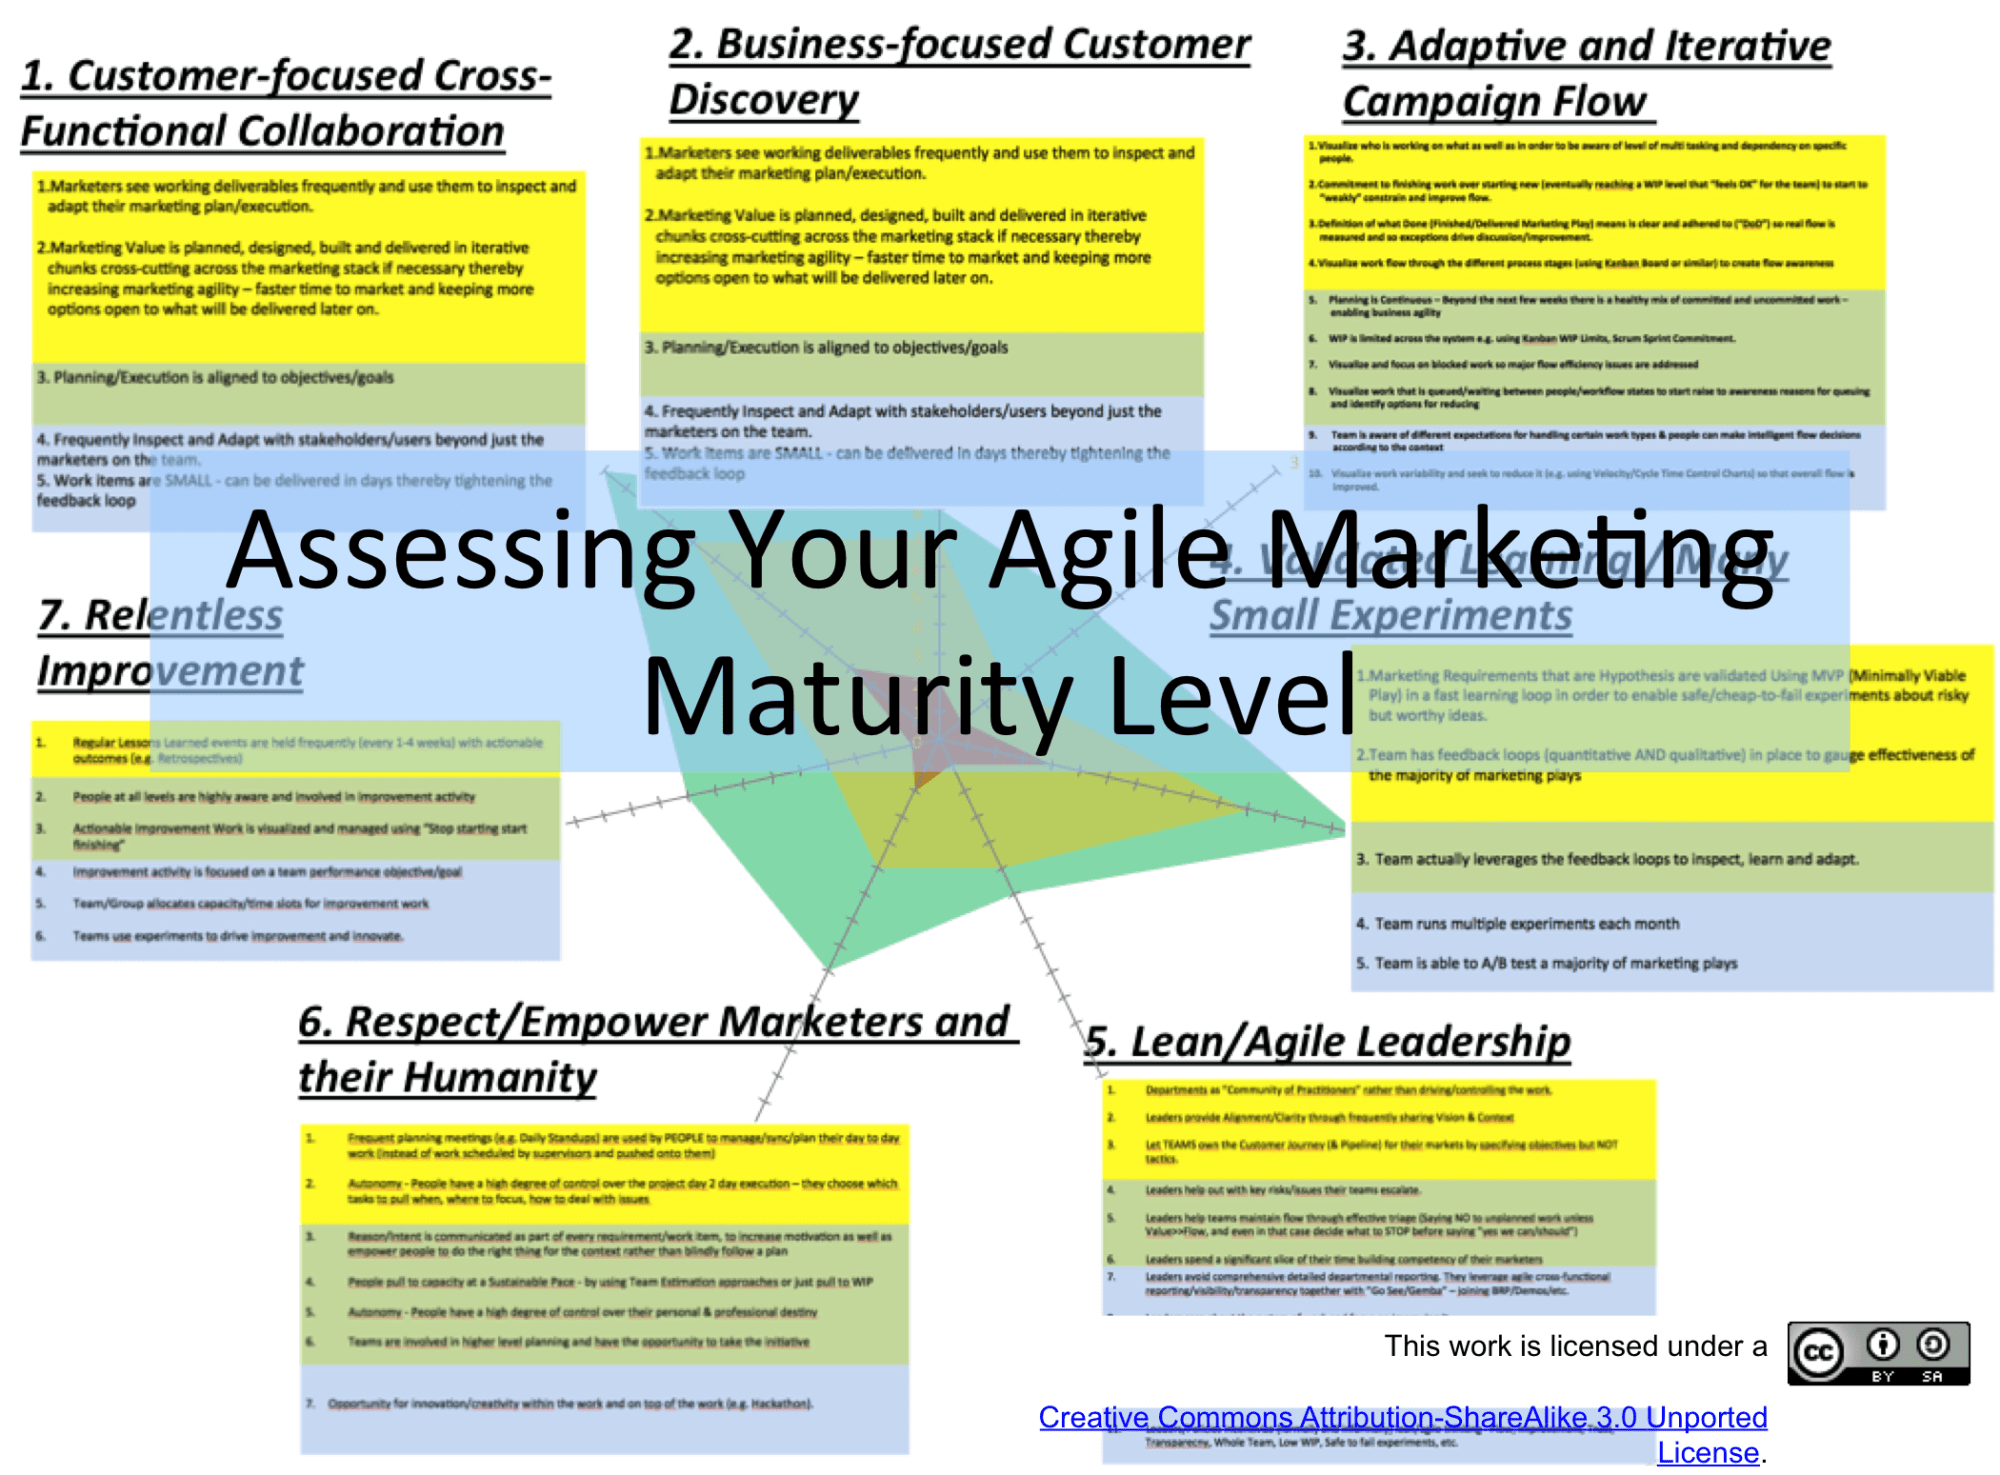 An agile marketing maturity chart designed by AgileSparks.